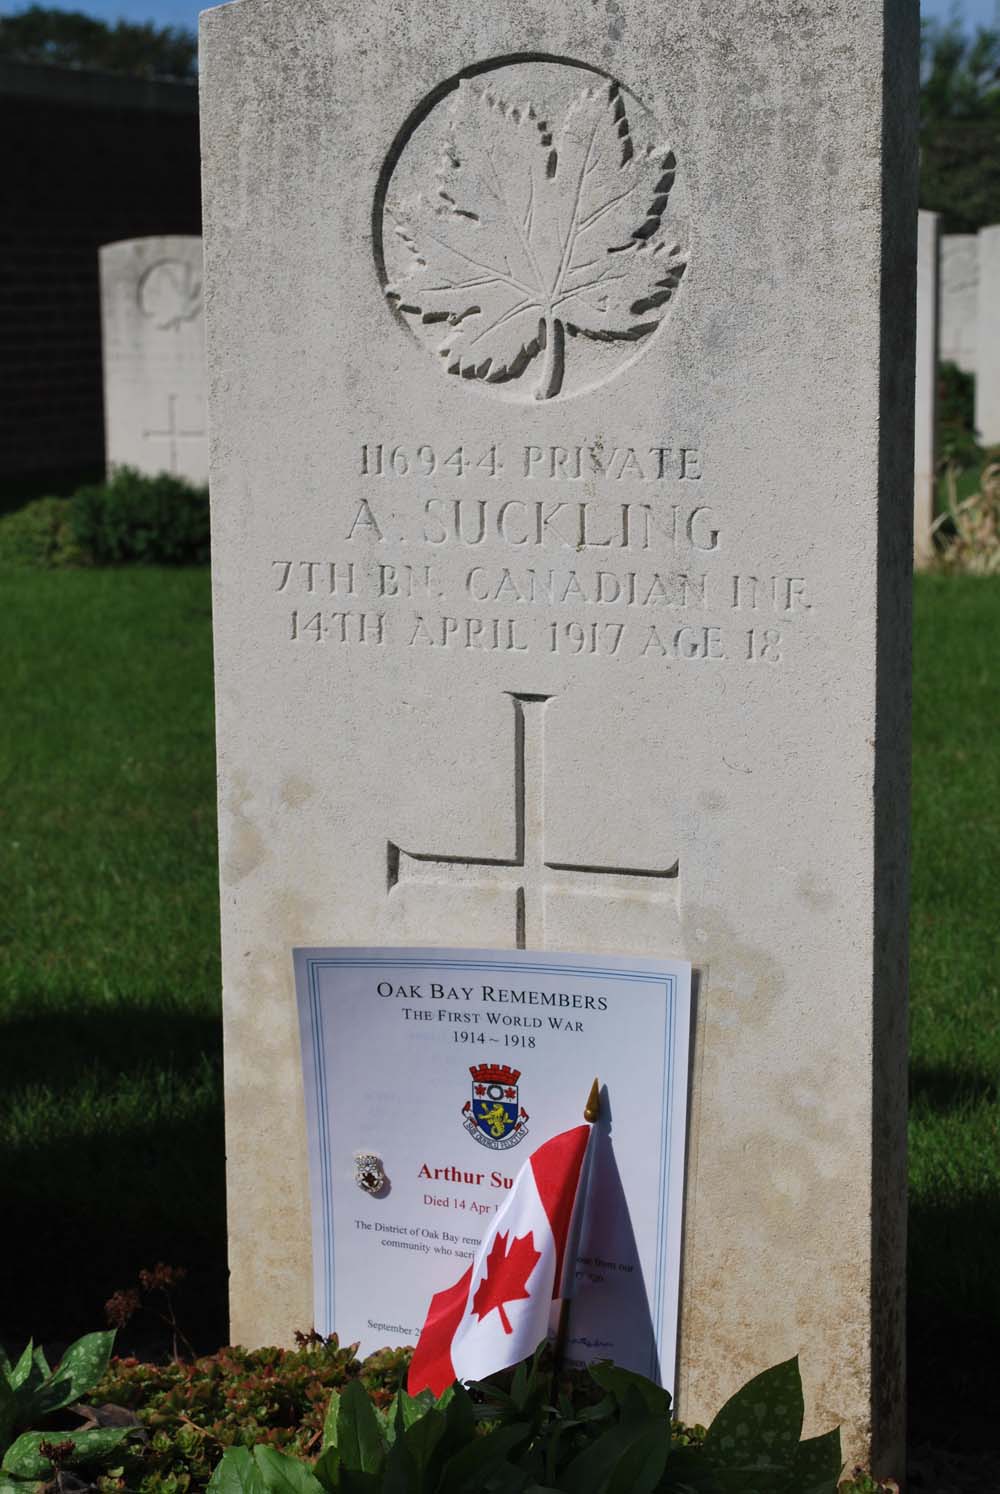 Memorial to Private Arthur Suckling, Bois-Carre British Cemetery, France (Photo: C. Duncan, 2018)